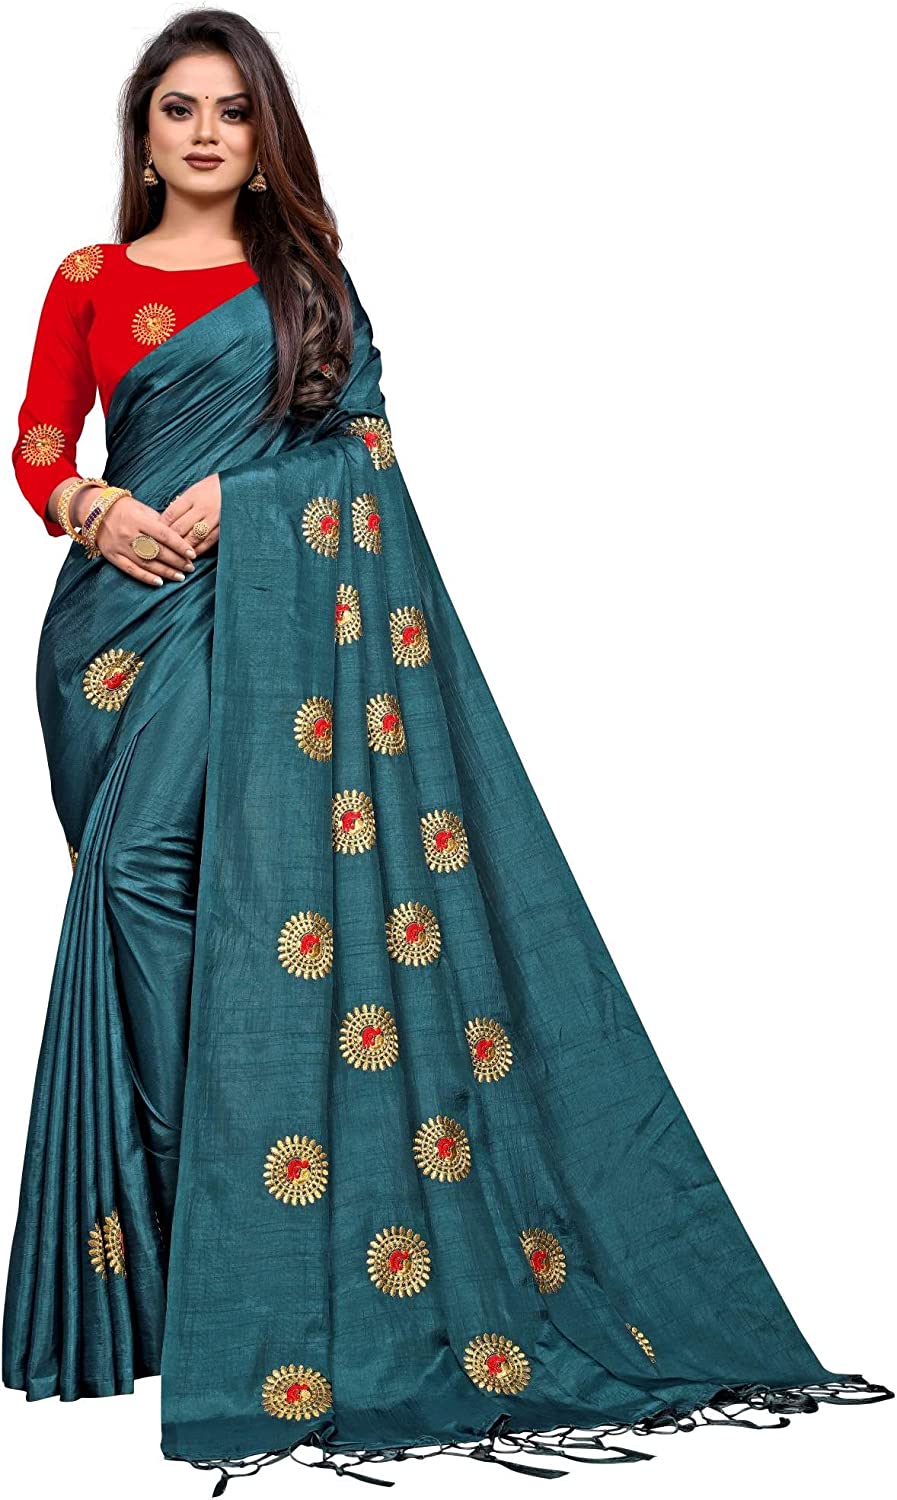 Designer Paper Mirror Sana Silk Saree at Rs.892/Piece in surat offer by  Aradhana Fashion